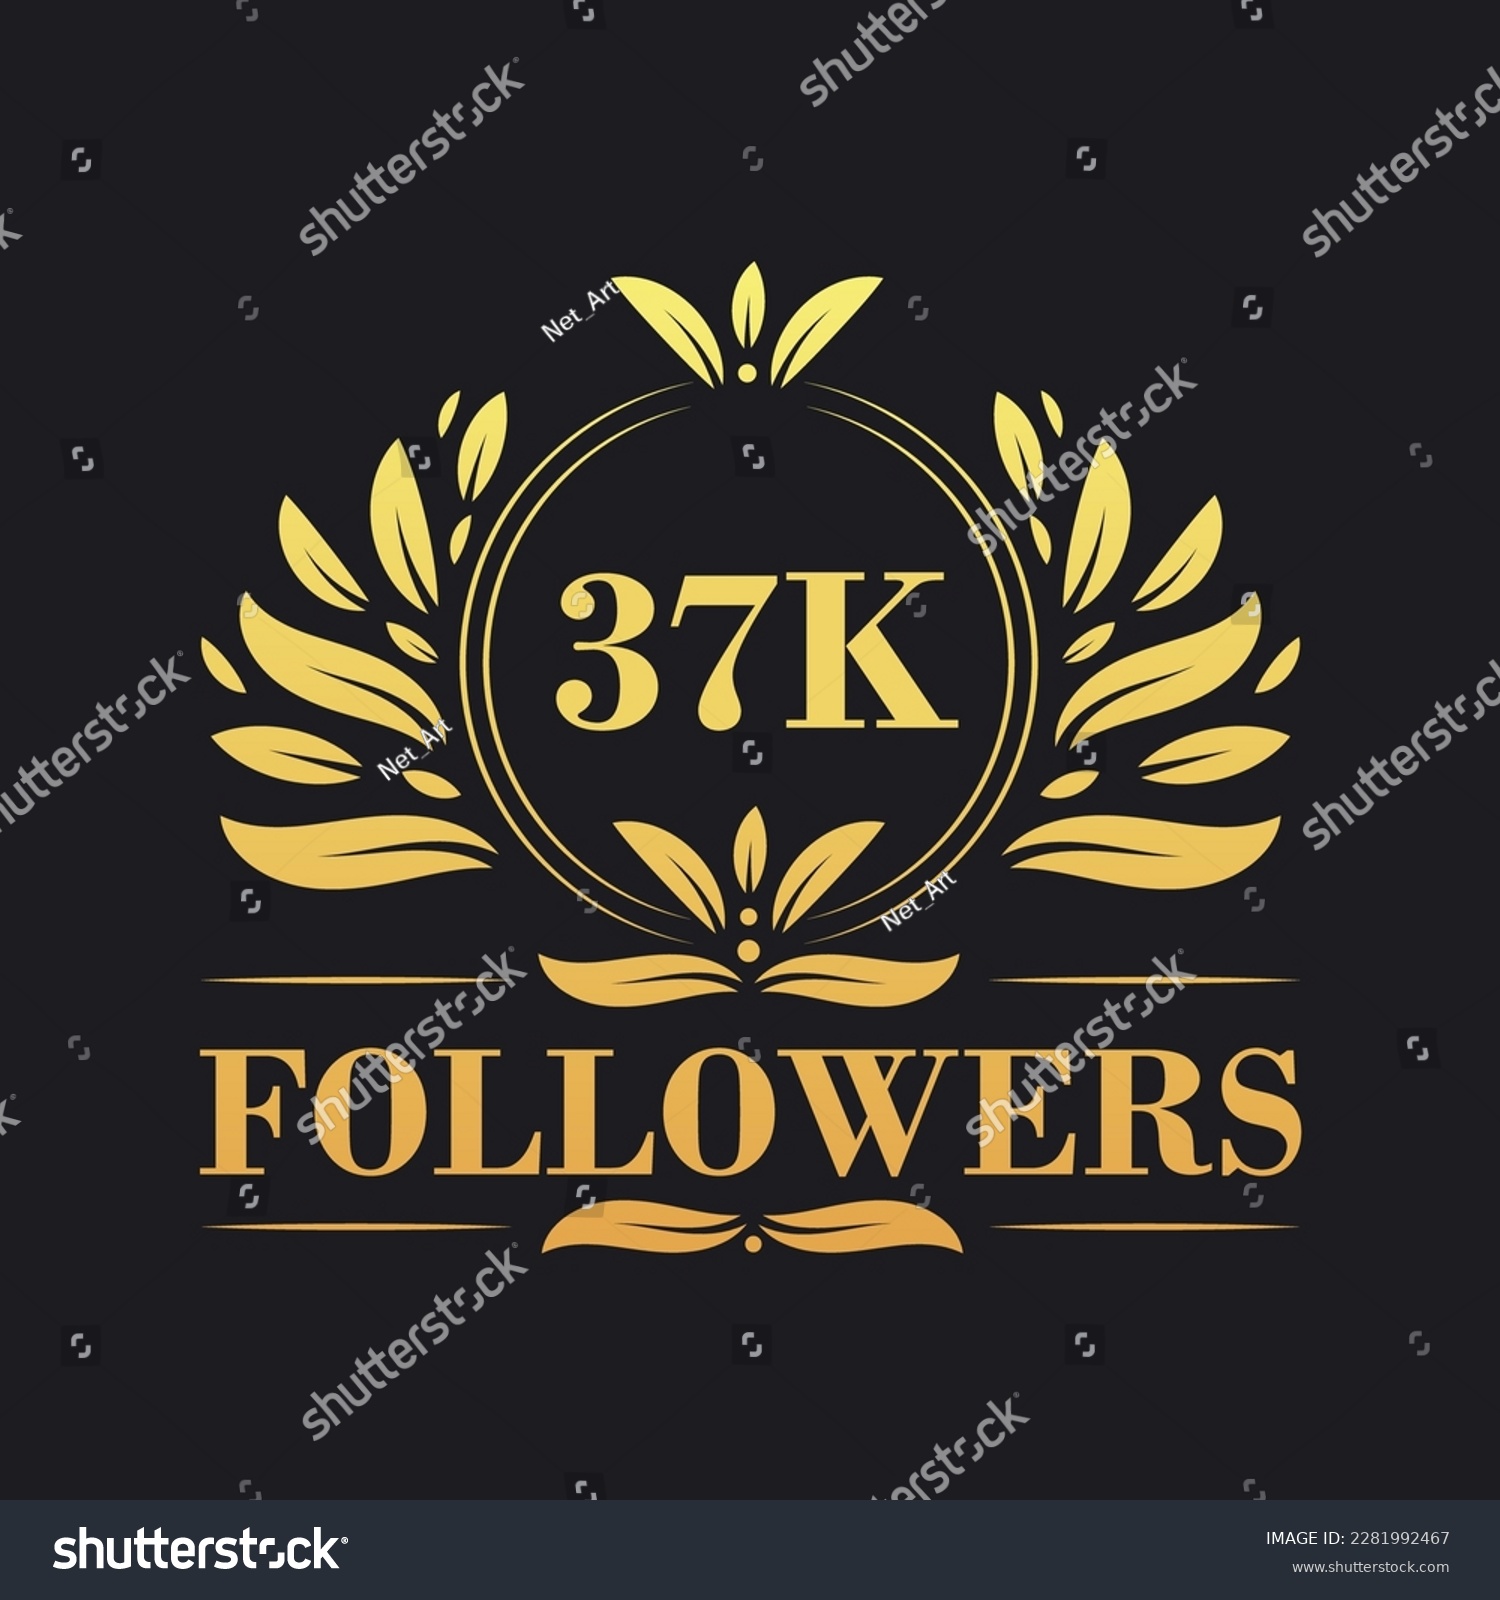 SVG of 37K Followers celebration design. Luxurious 37K Followers logo for social media followers svg